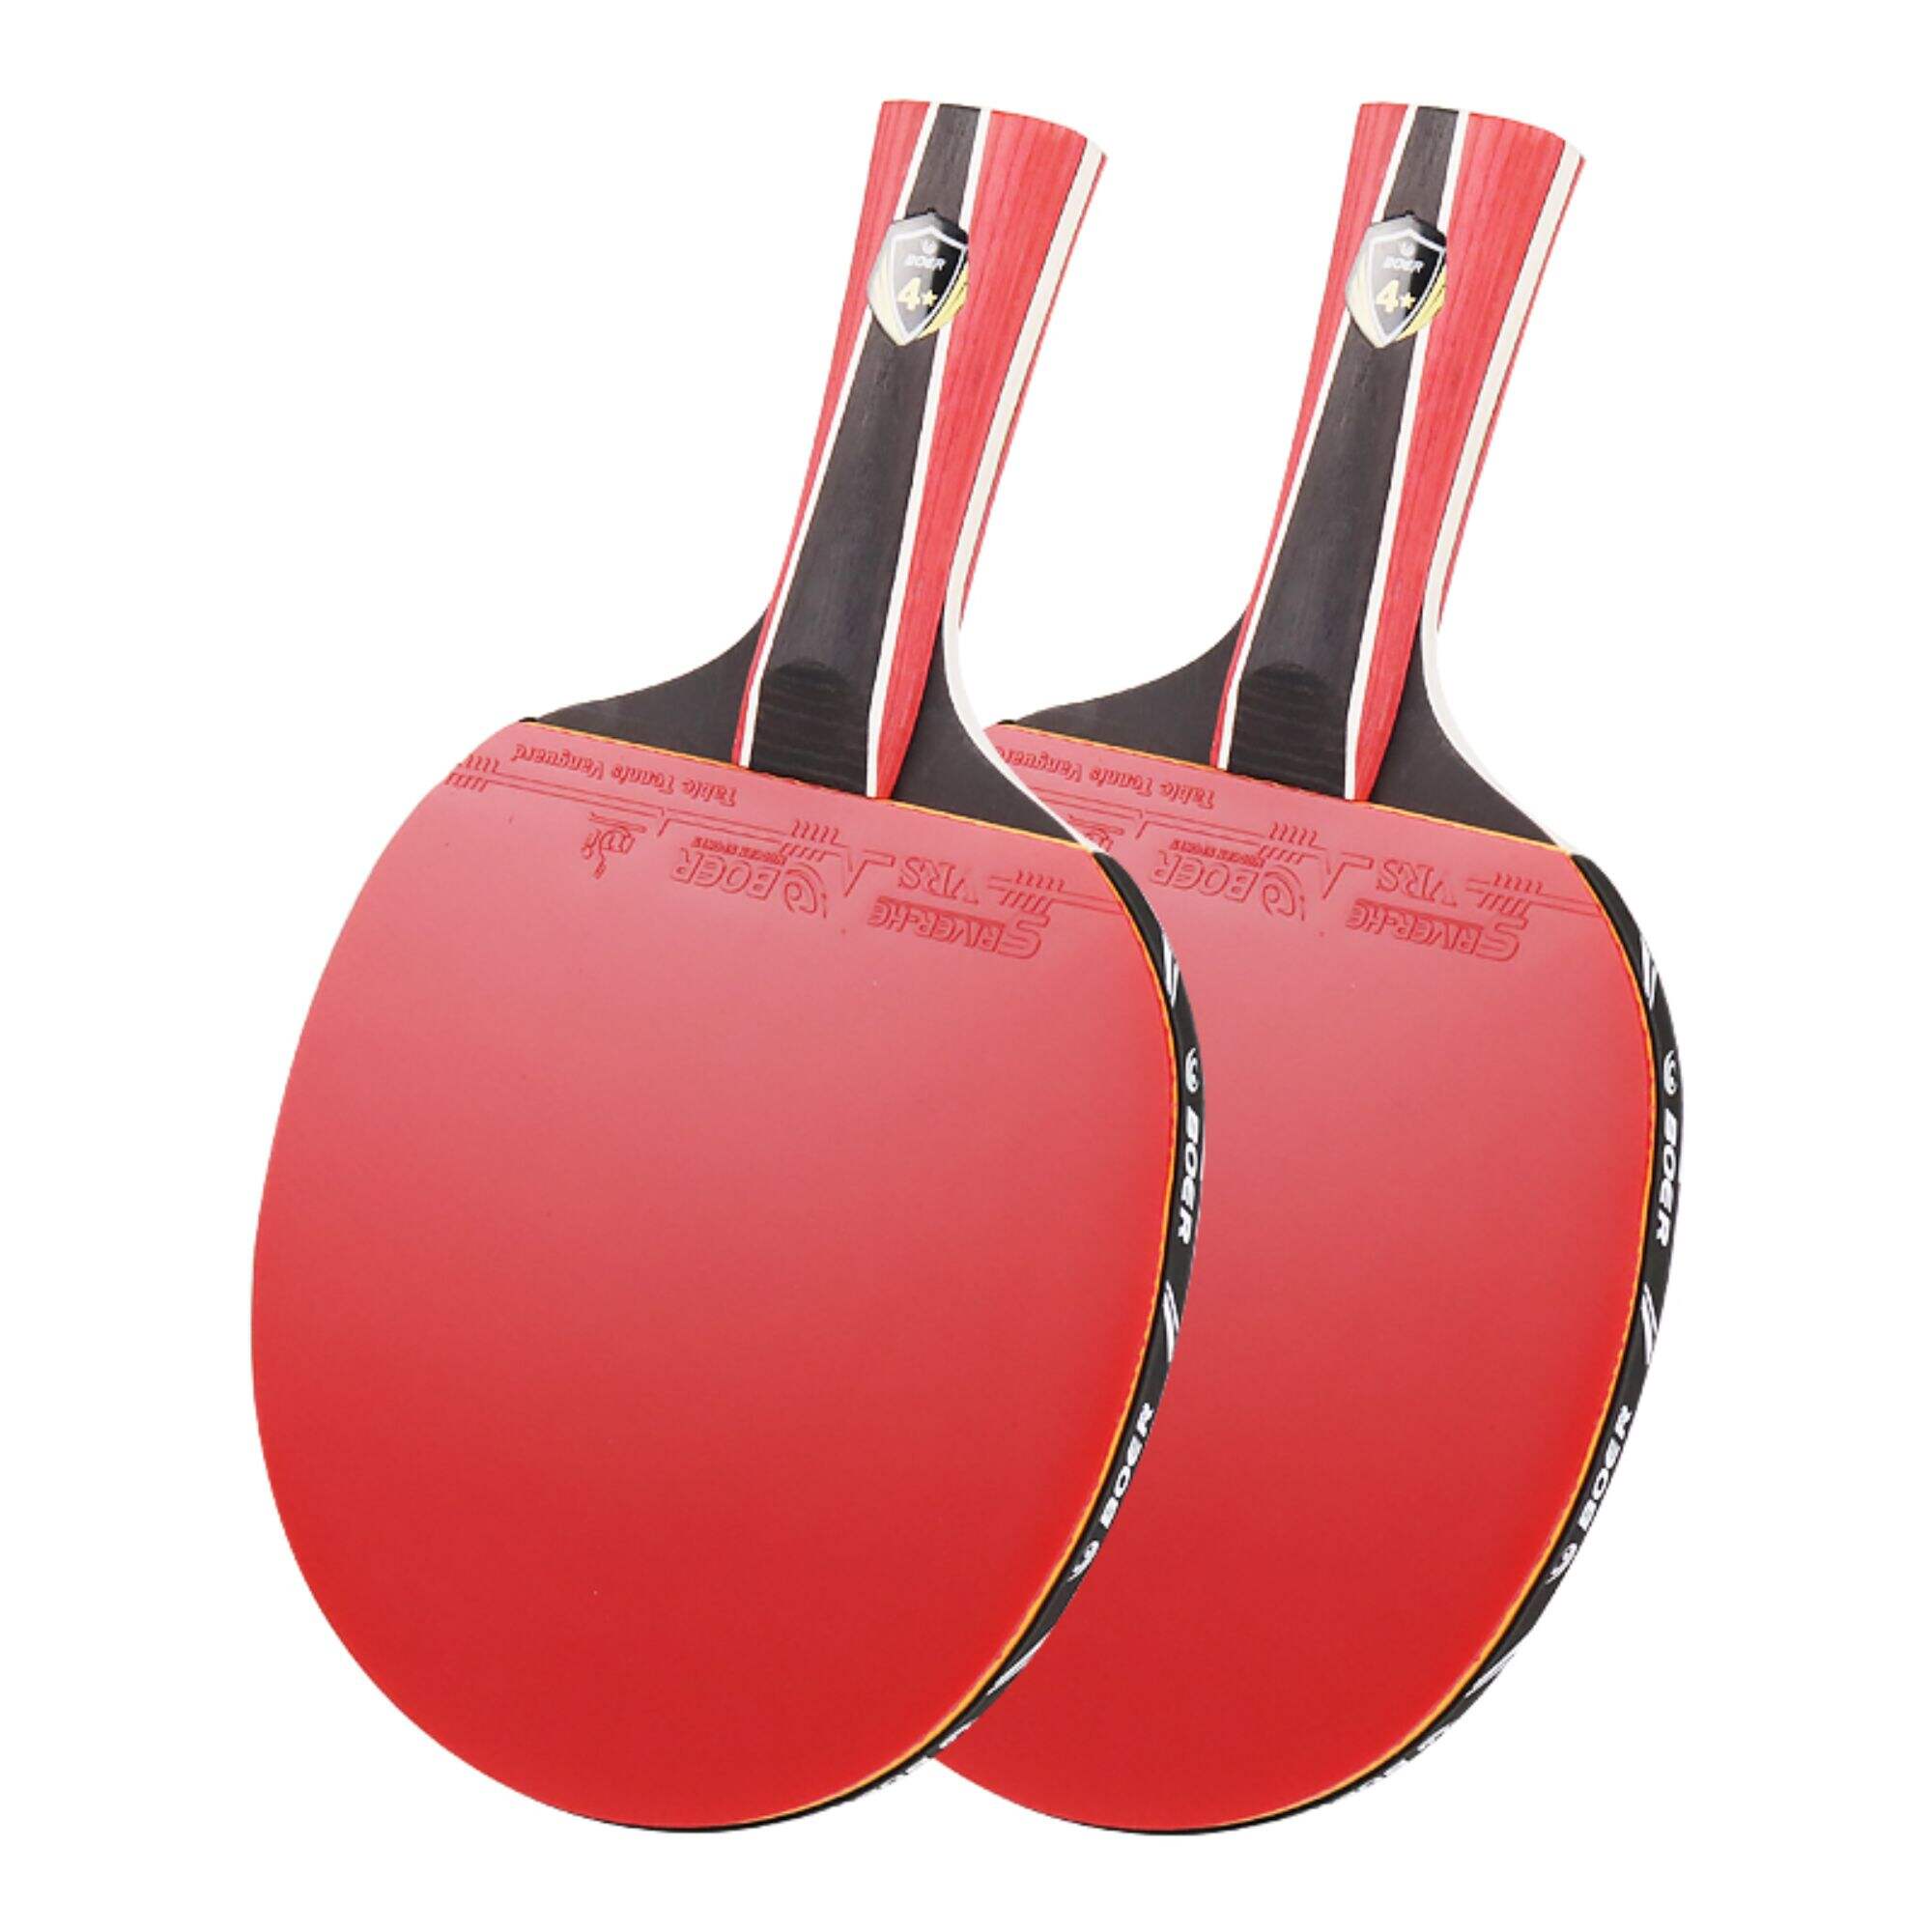 Boer 4star Professional Table Tennis Rakcet/Bat/Paddle